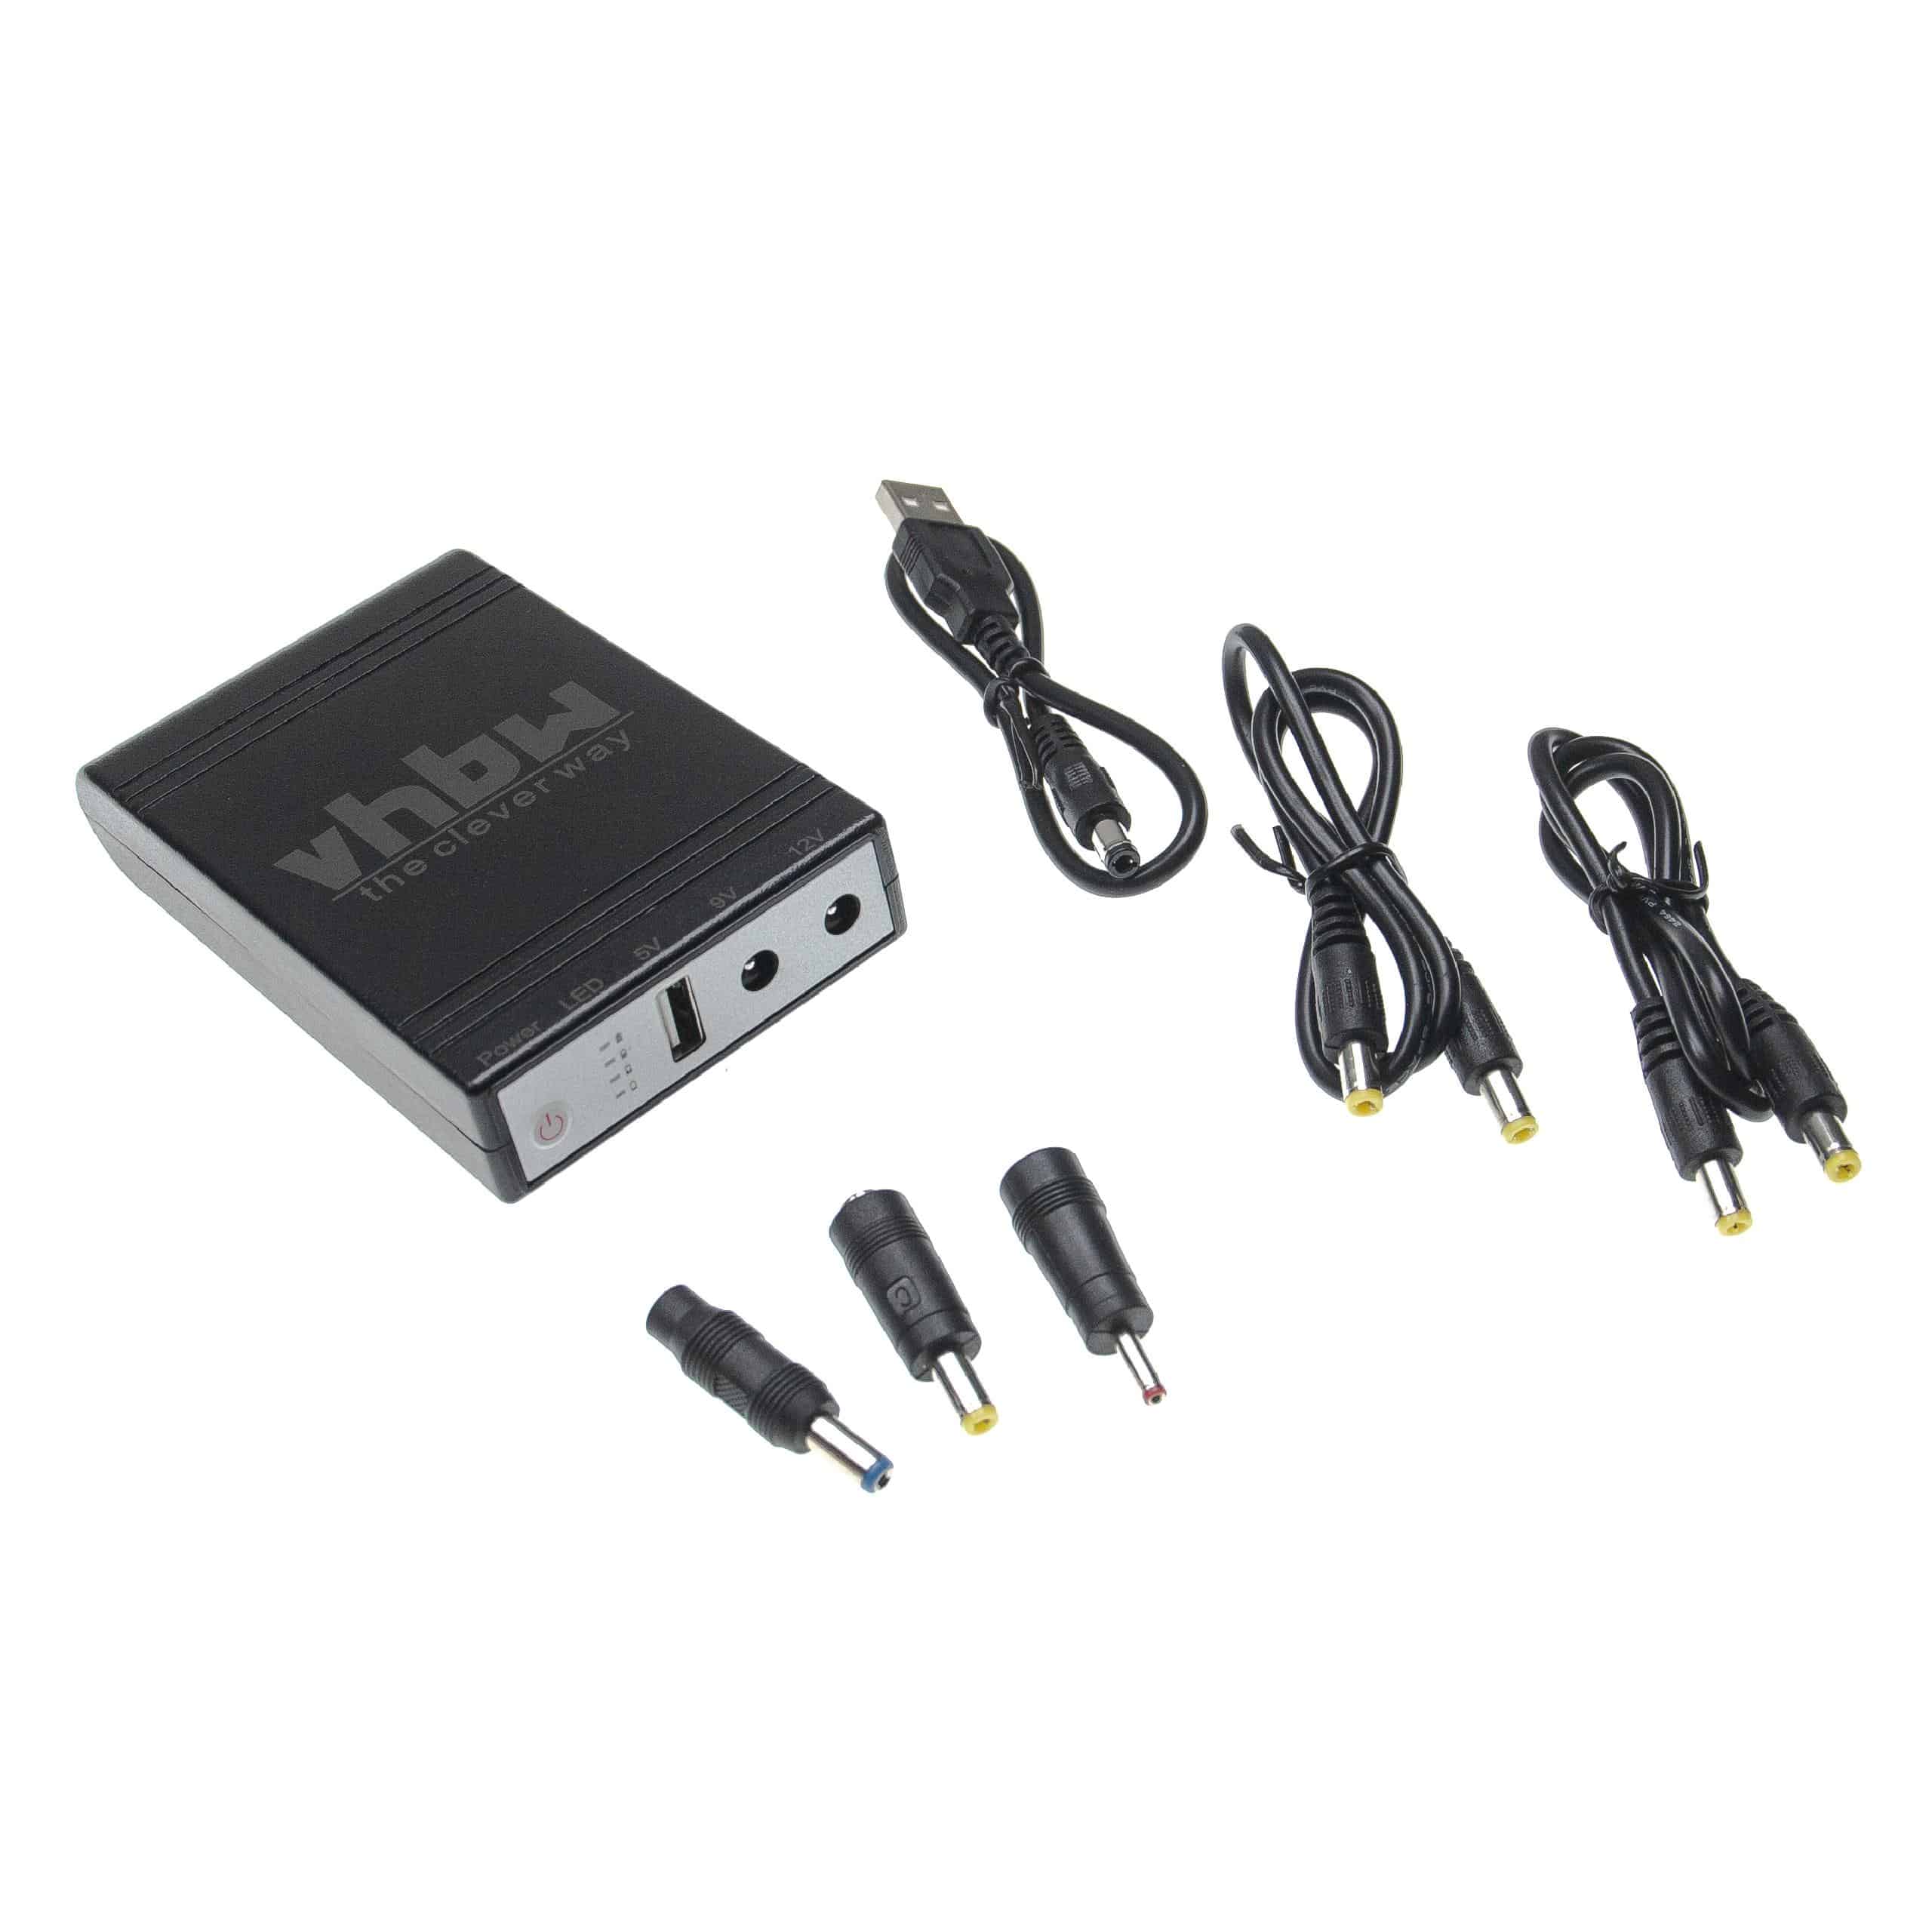 Mini USV für Router, IP-Kameras, Modem, Computer u.a. - USB 5 V / DC 9 V / DC 12 V, 1,0 A